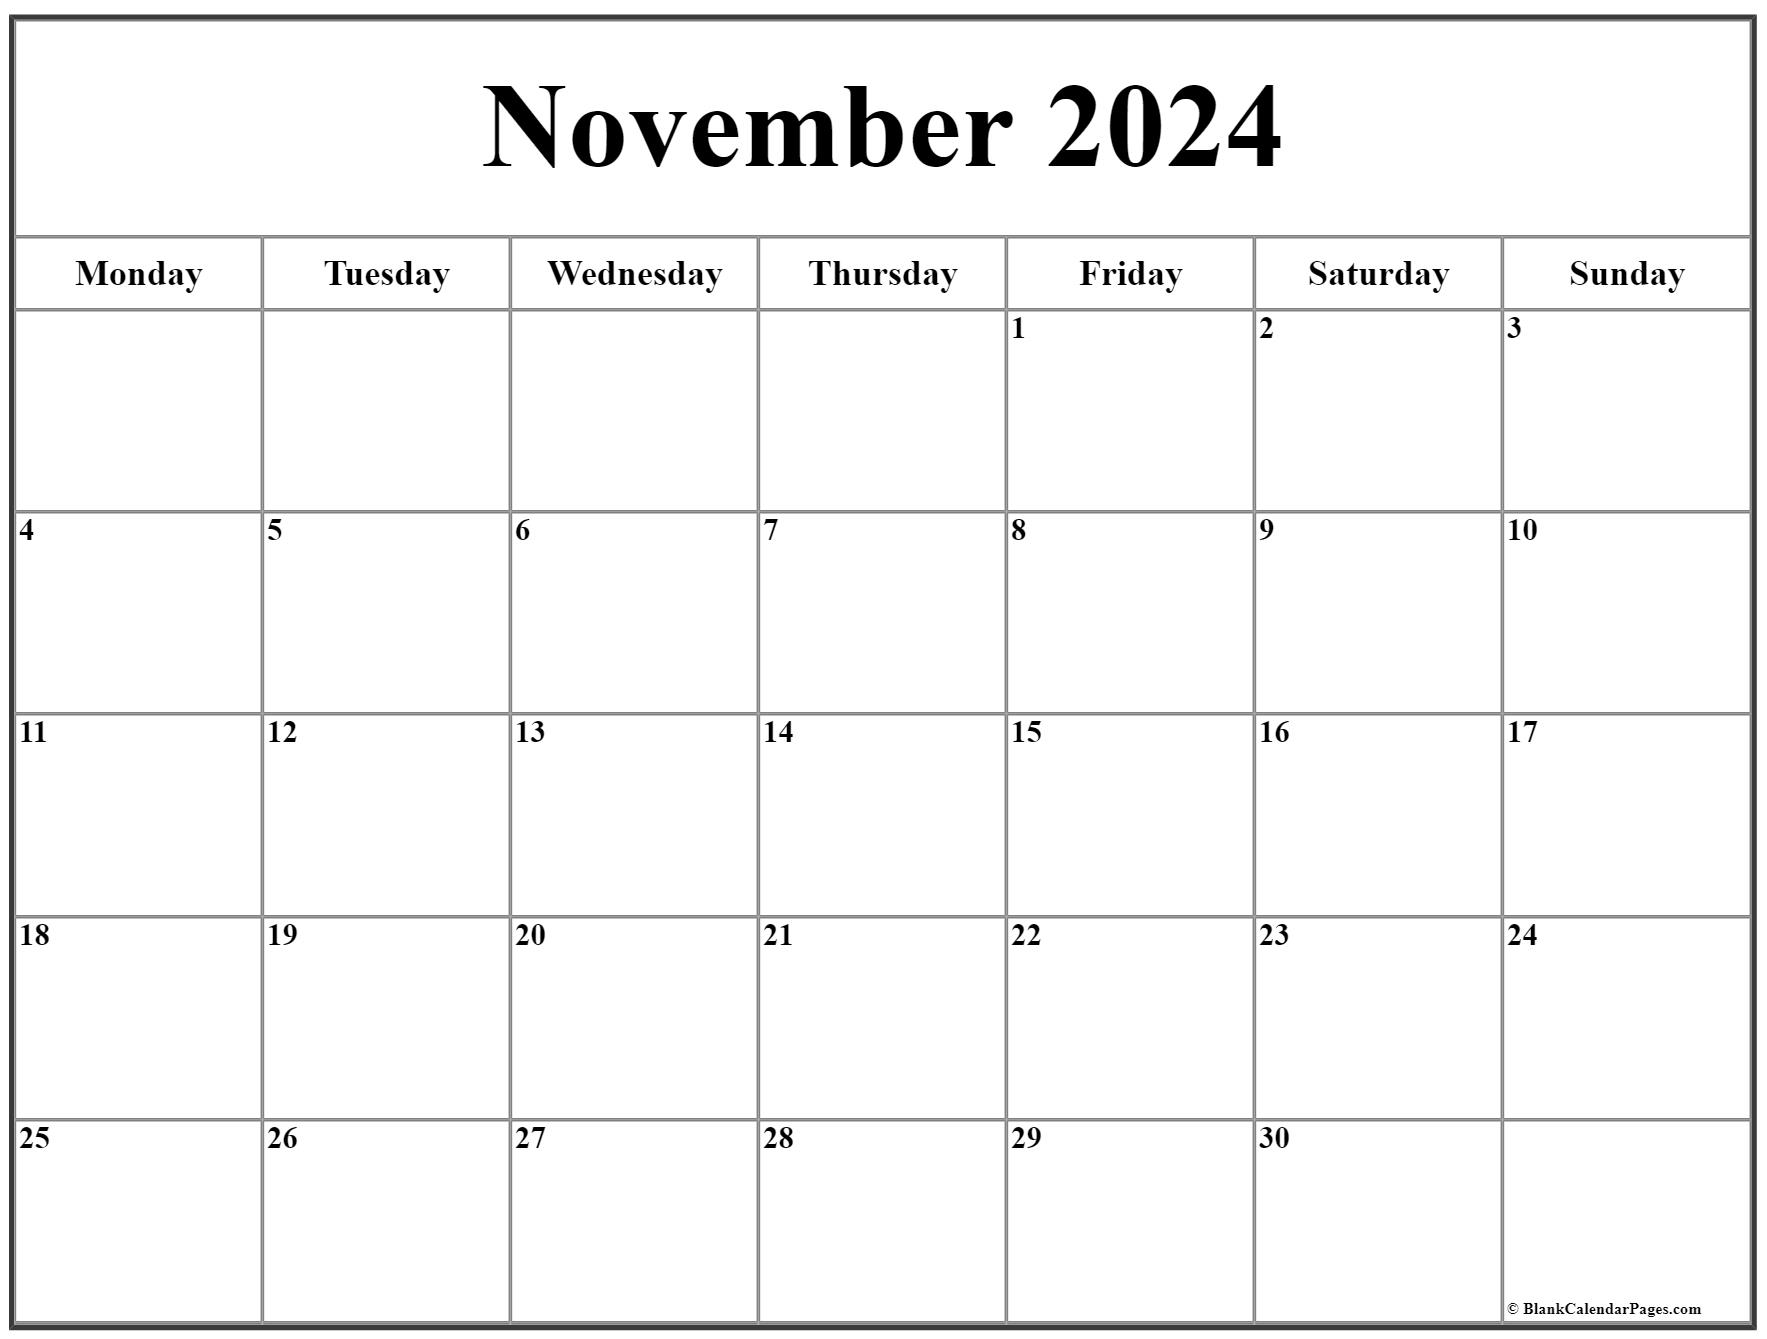 November 2020 Monday Calendar | Monday to Sunday